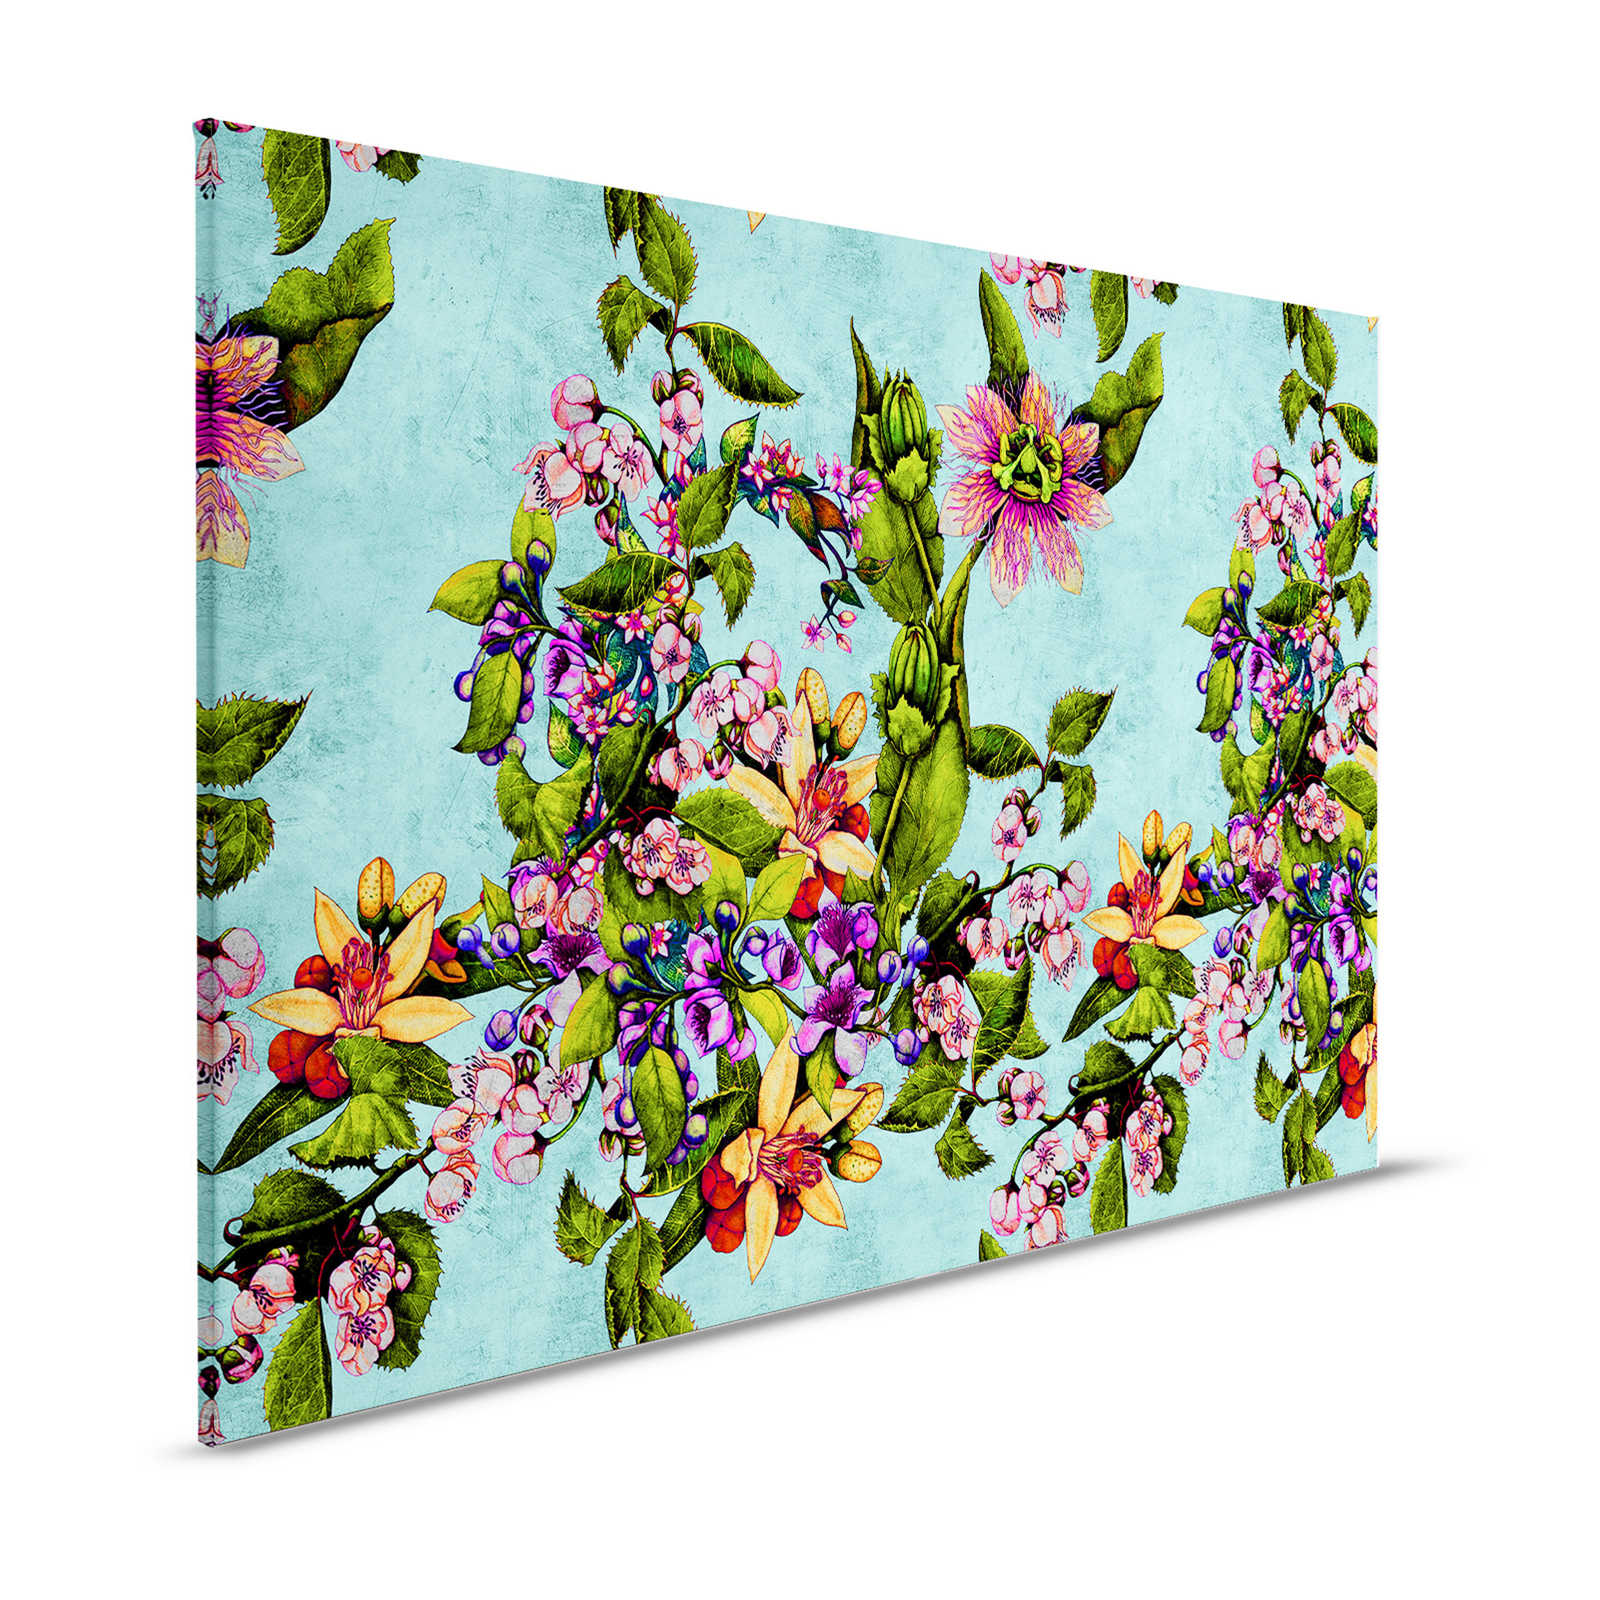 Tropical Passion 1 - Quadro su tela con motivi floreali - 1,20 m x 0,80 m
